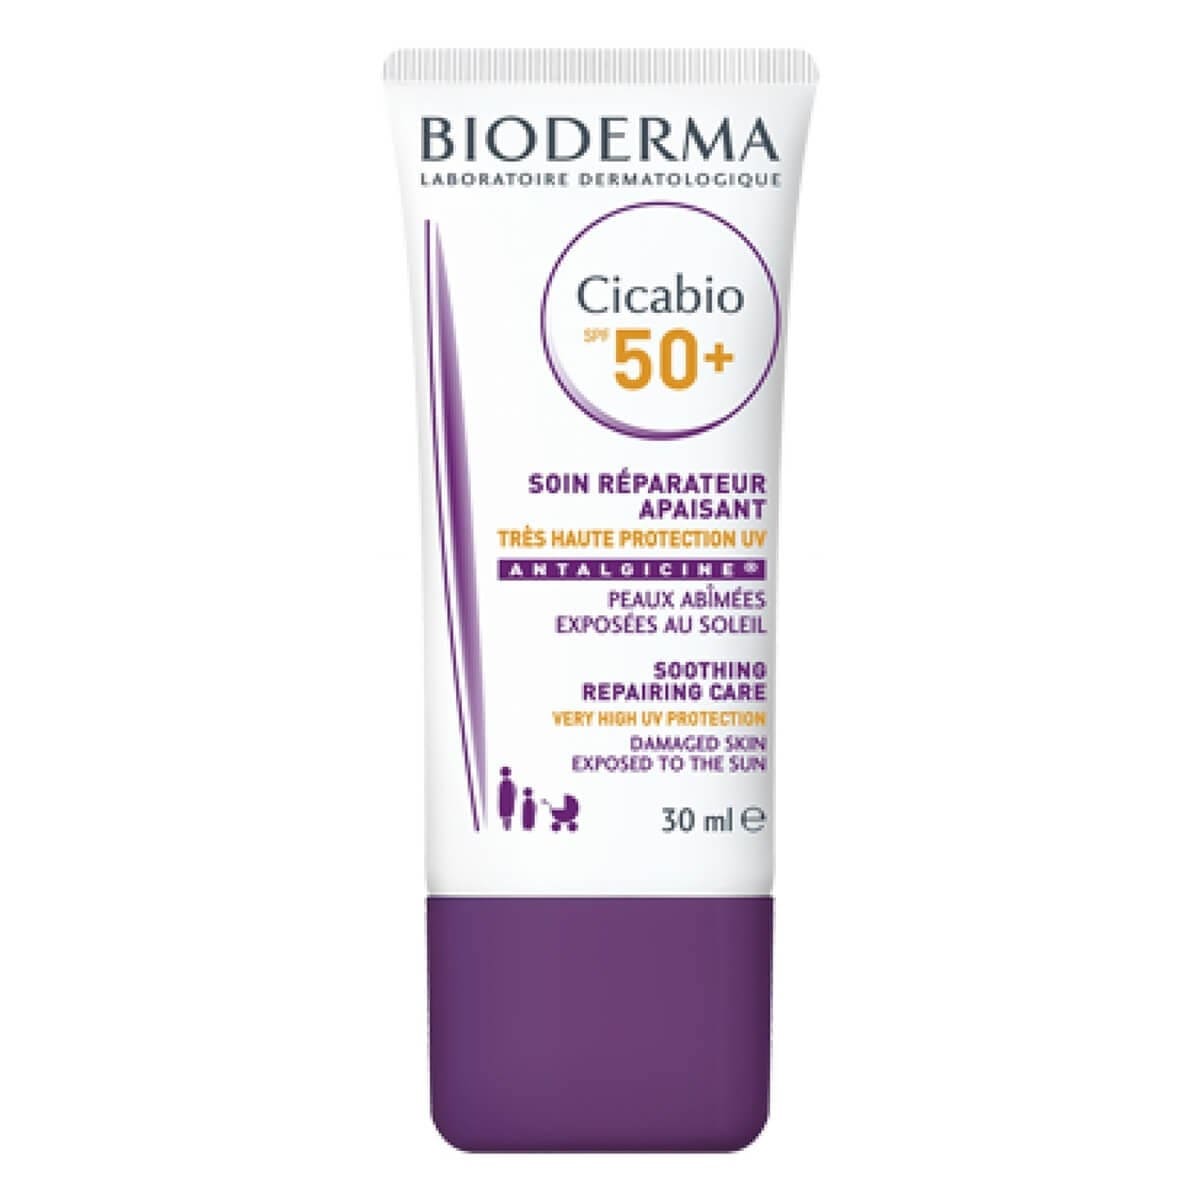 Kem dưỡng trắng da mặt Bioderma Cicabio Crème SPF 50+